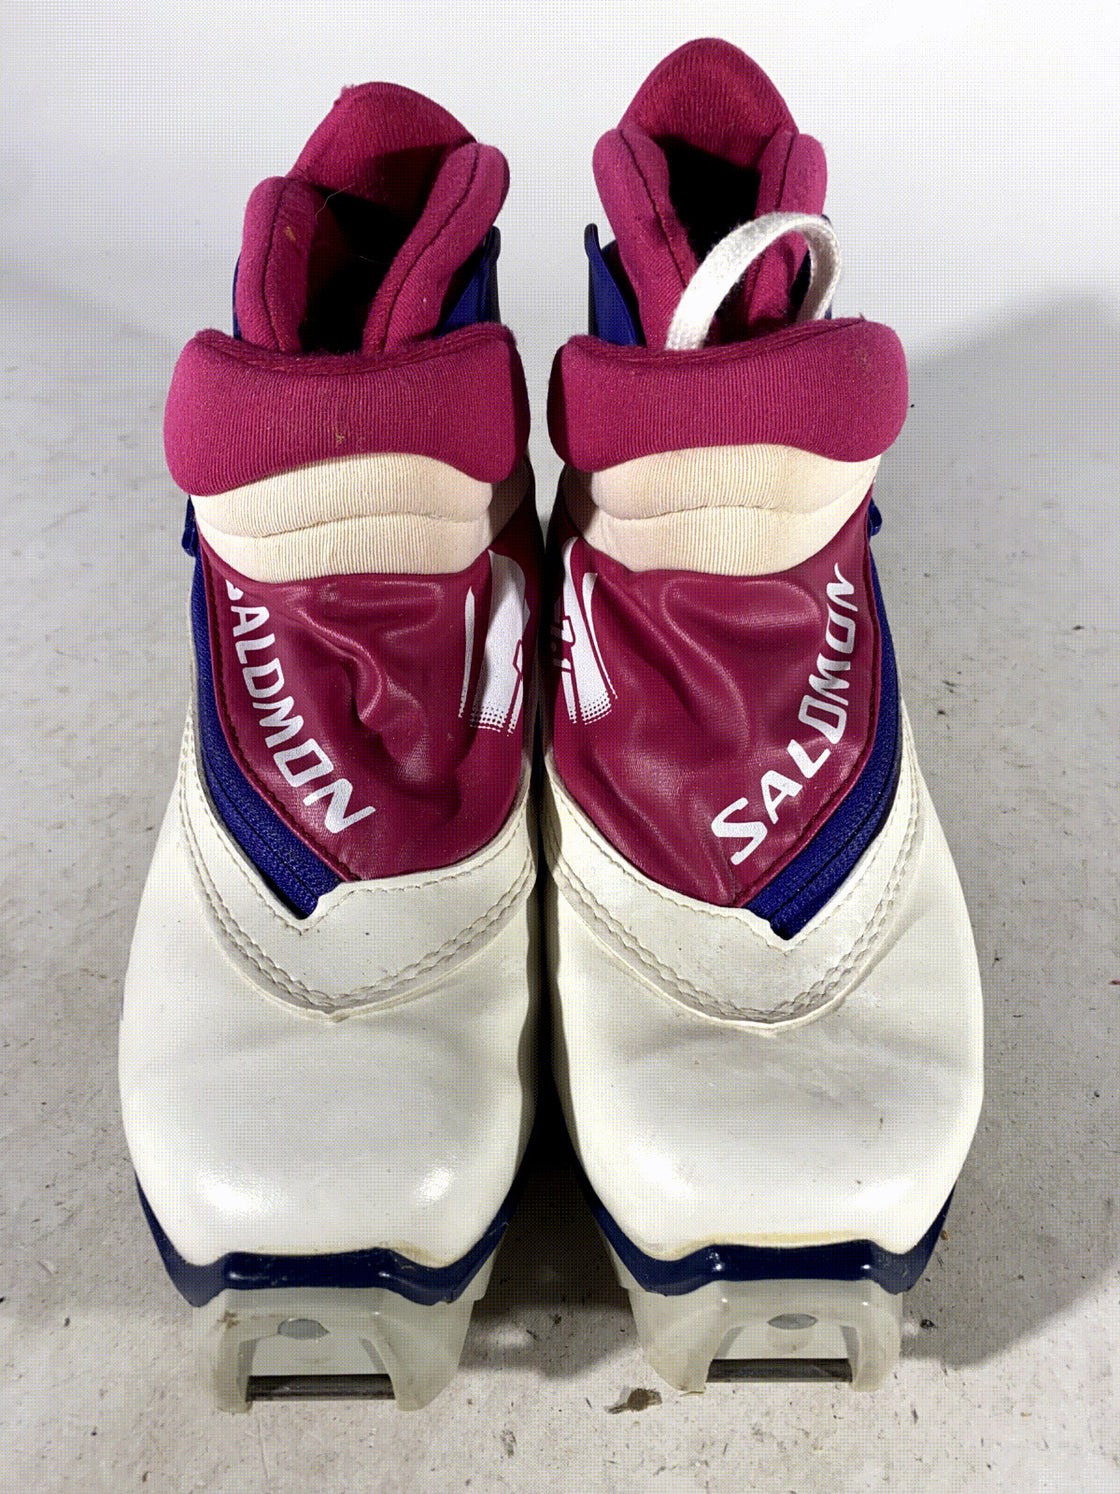 SALOMON Vitane Combi Cross Country Ski Boots Size EU38 US5.5 SNS Profil